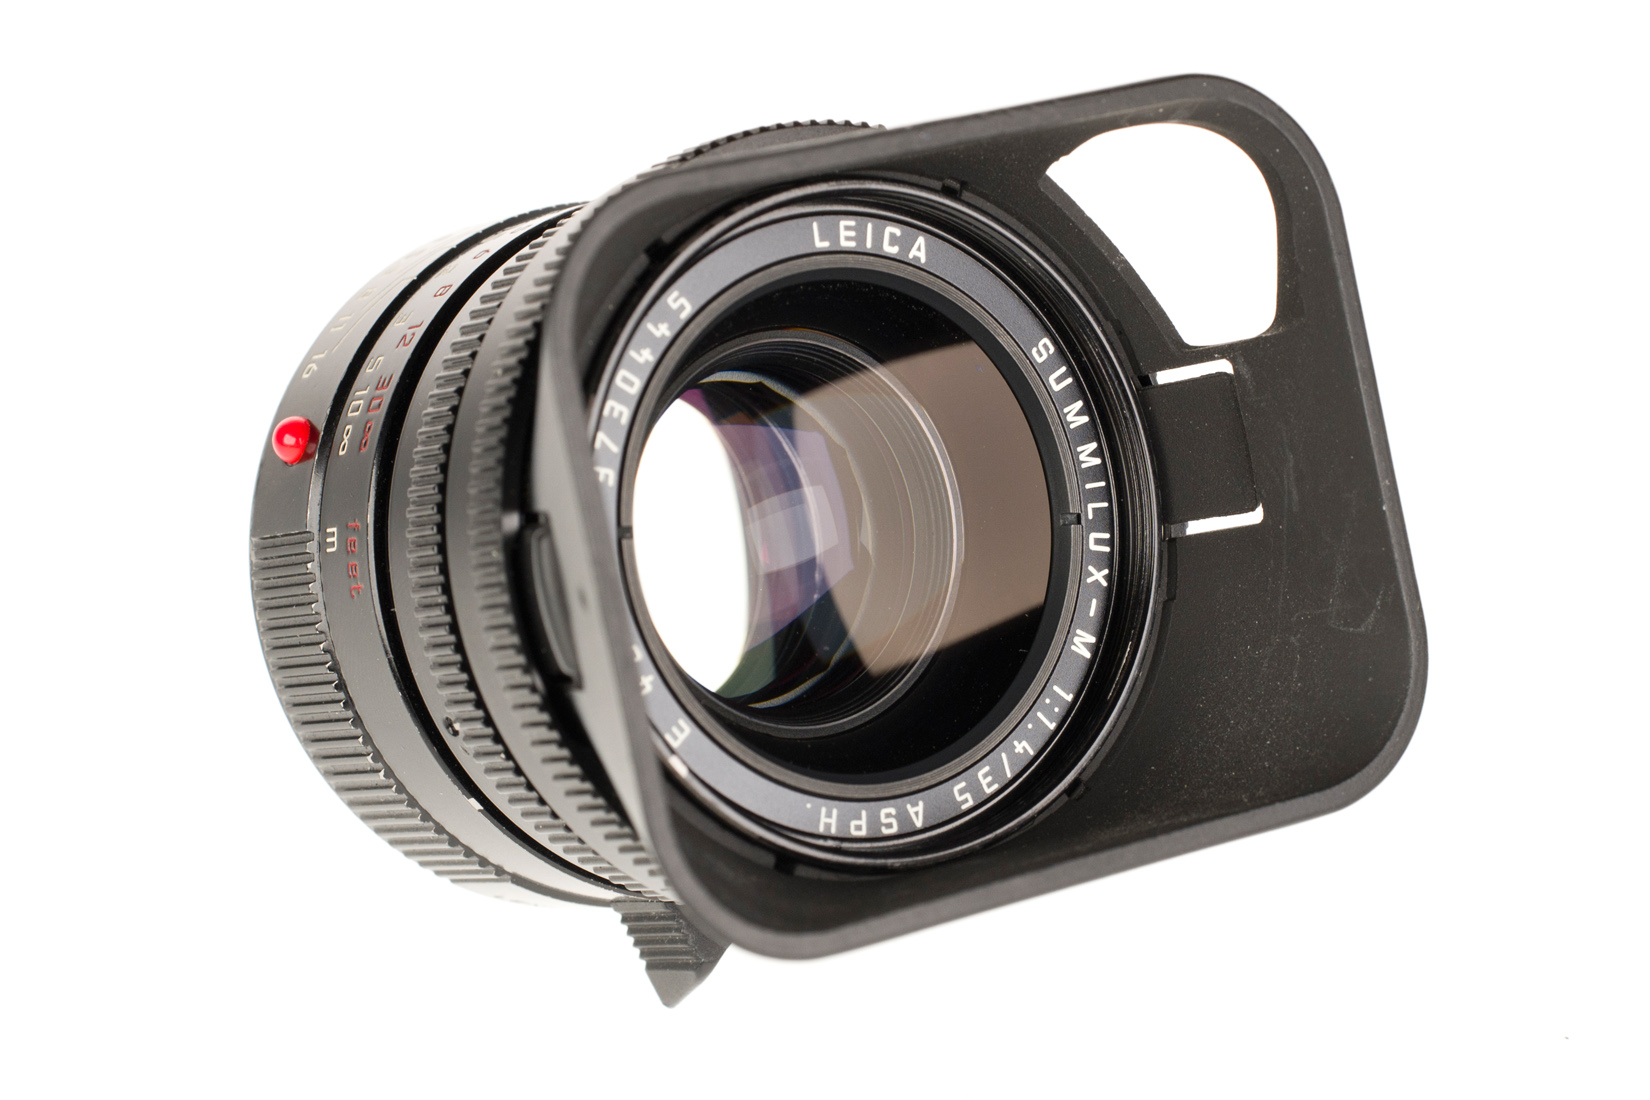 Leica Summilux 1:1.4/35mm ASPH. black repainted